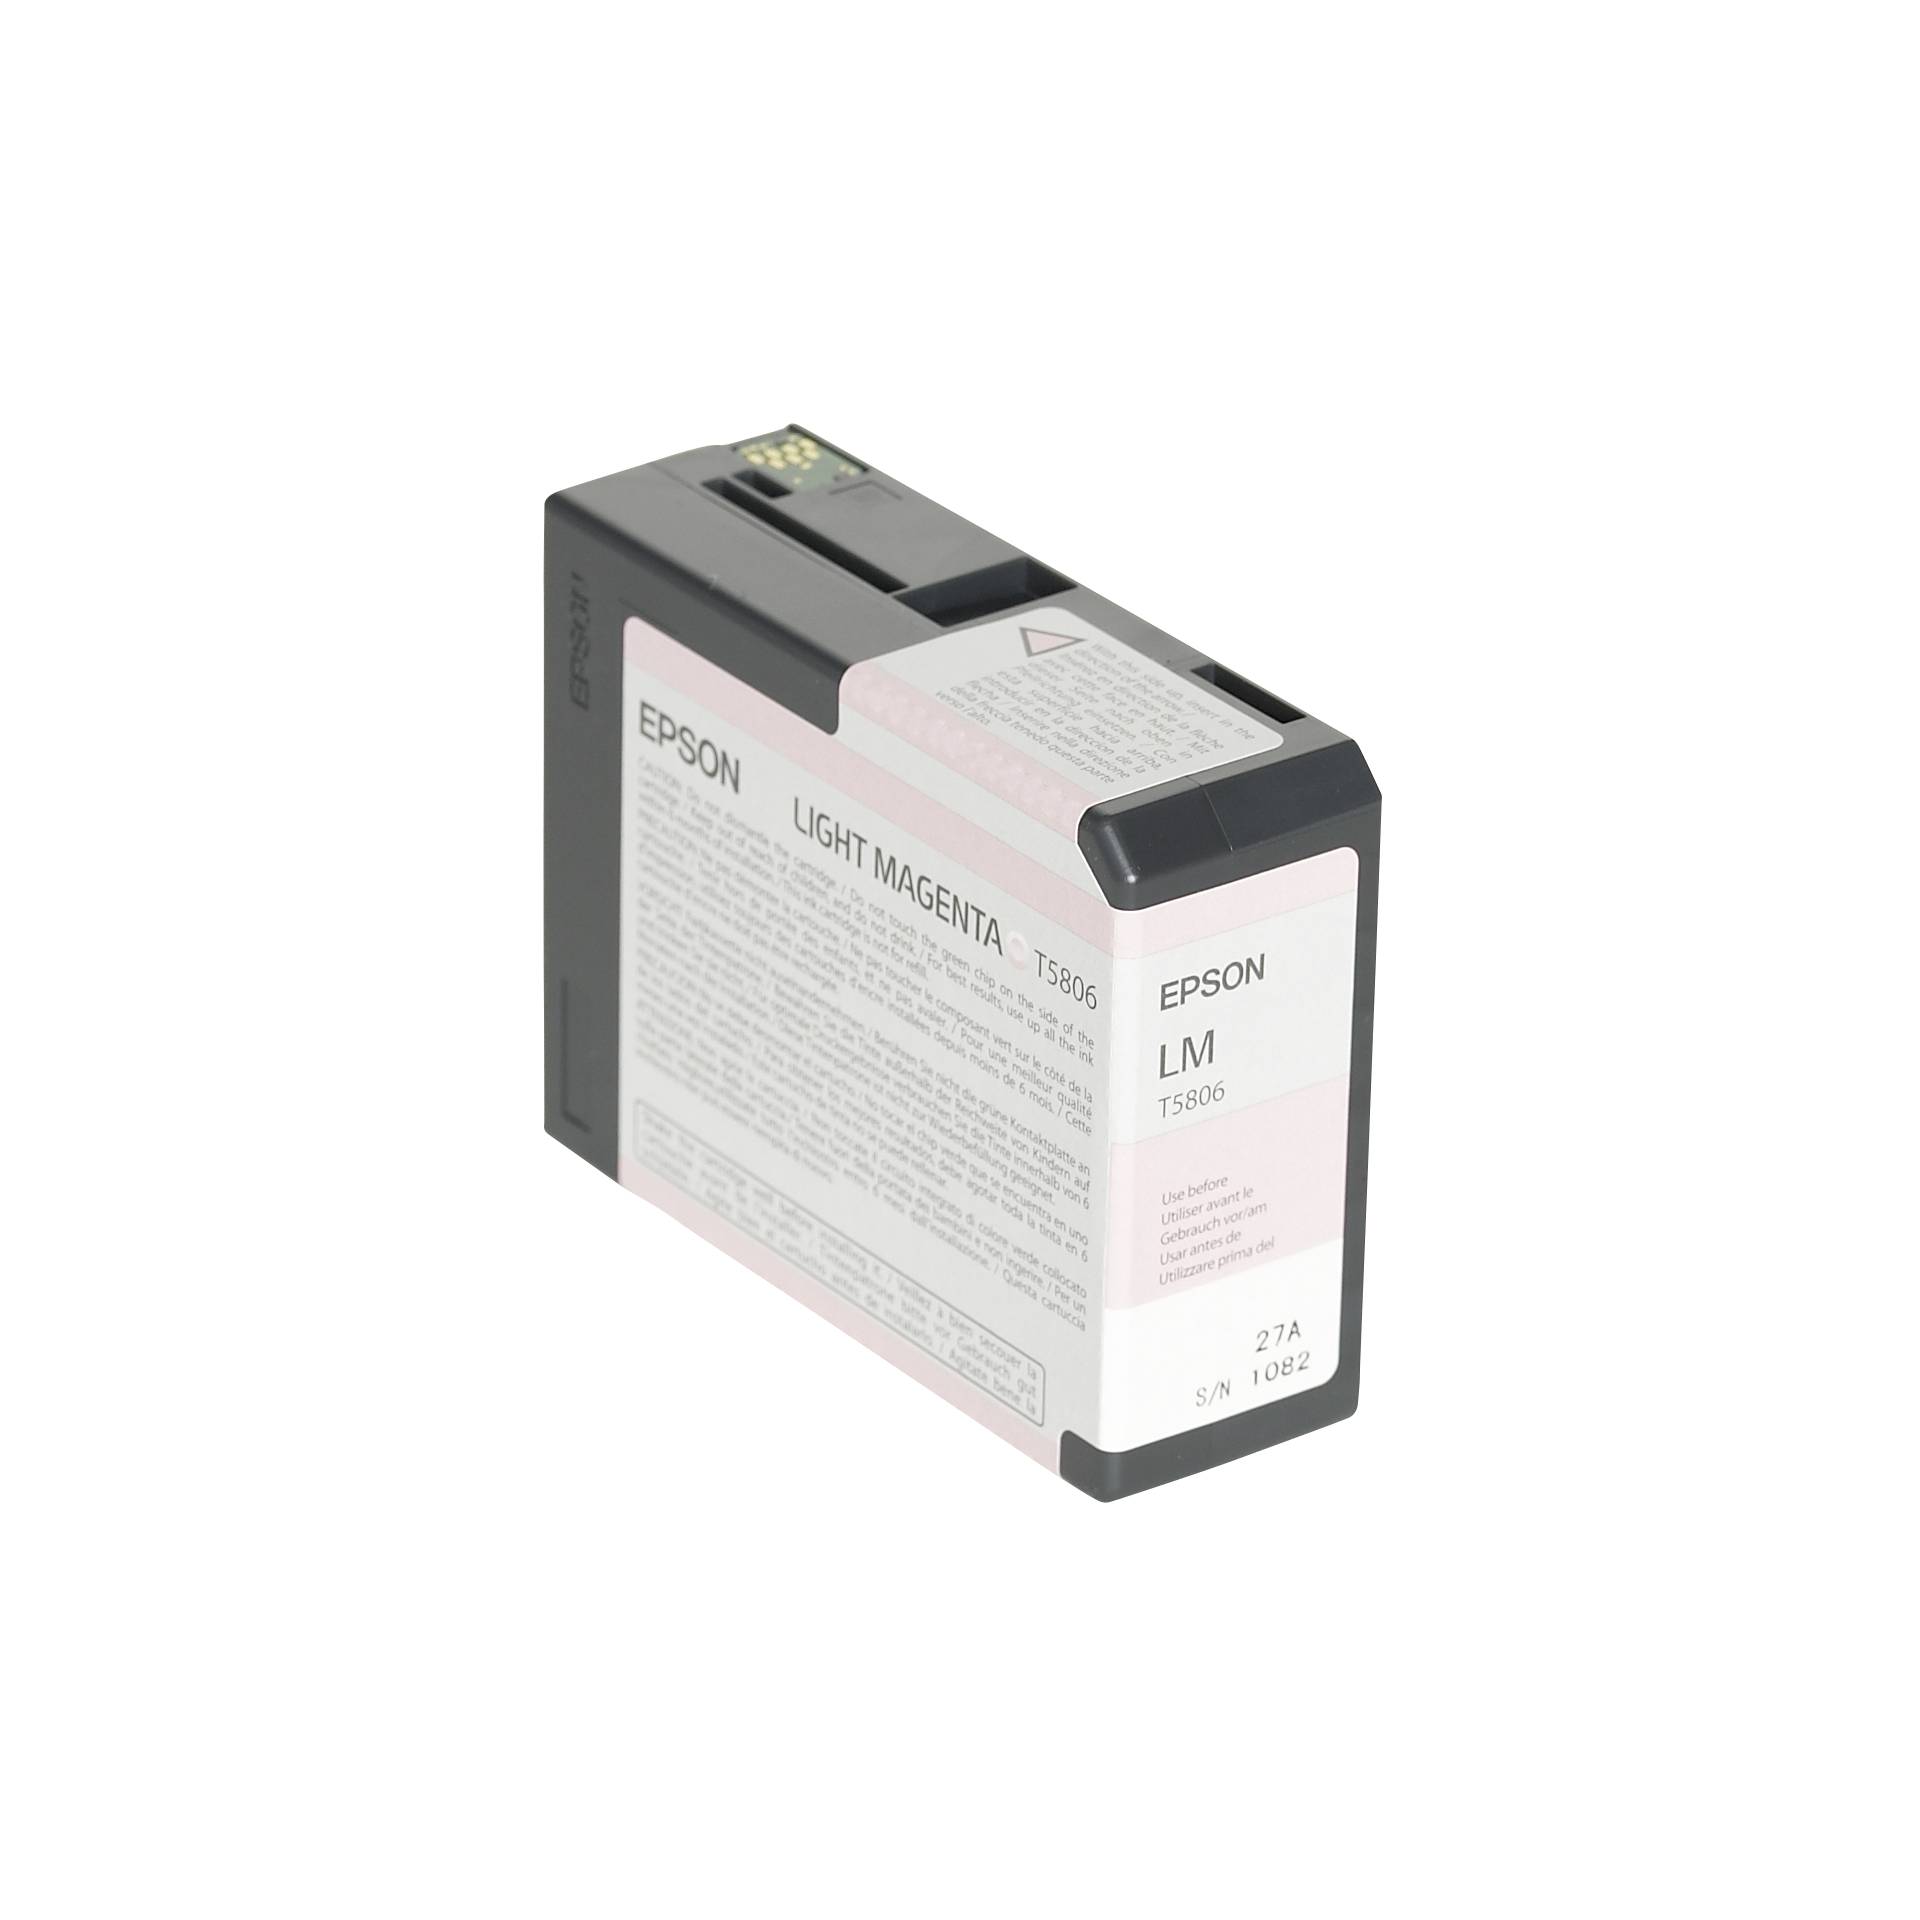 Epson cartuccia     light magenta T 580  80 ml      T 5806